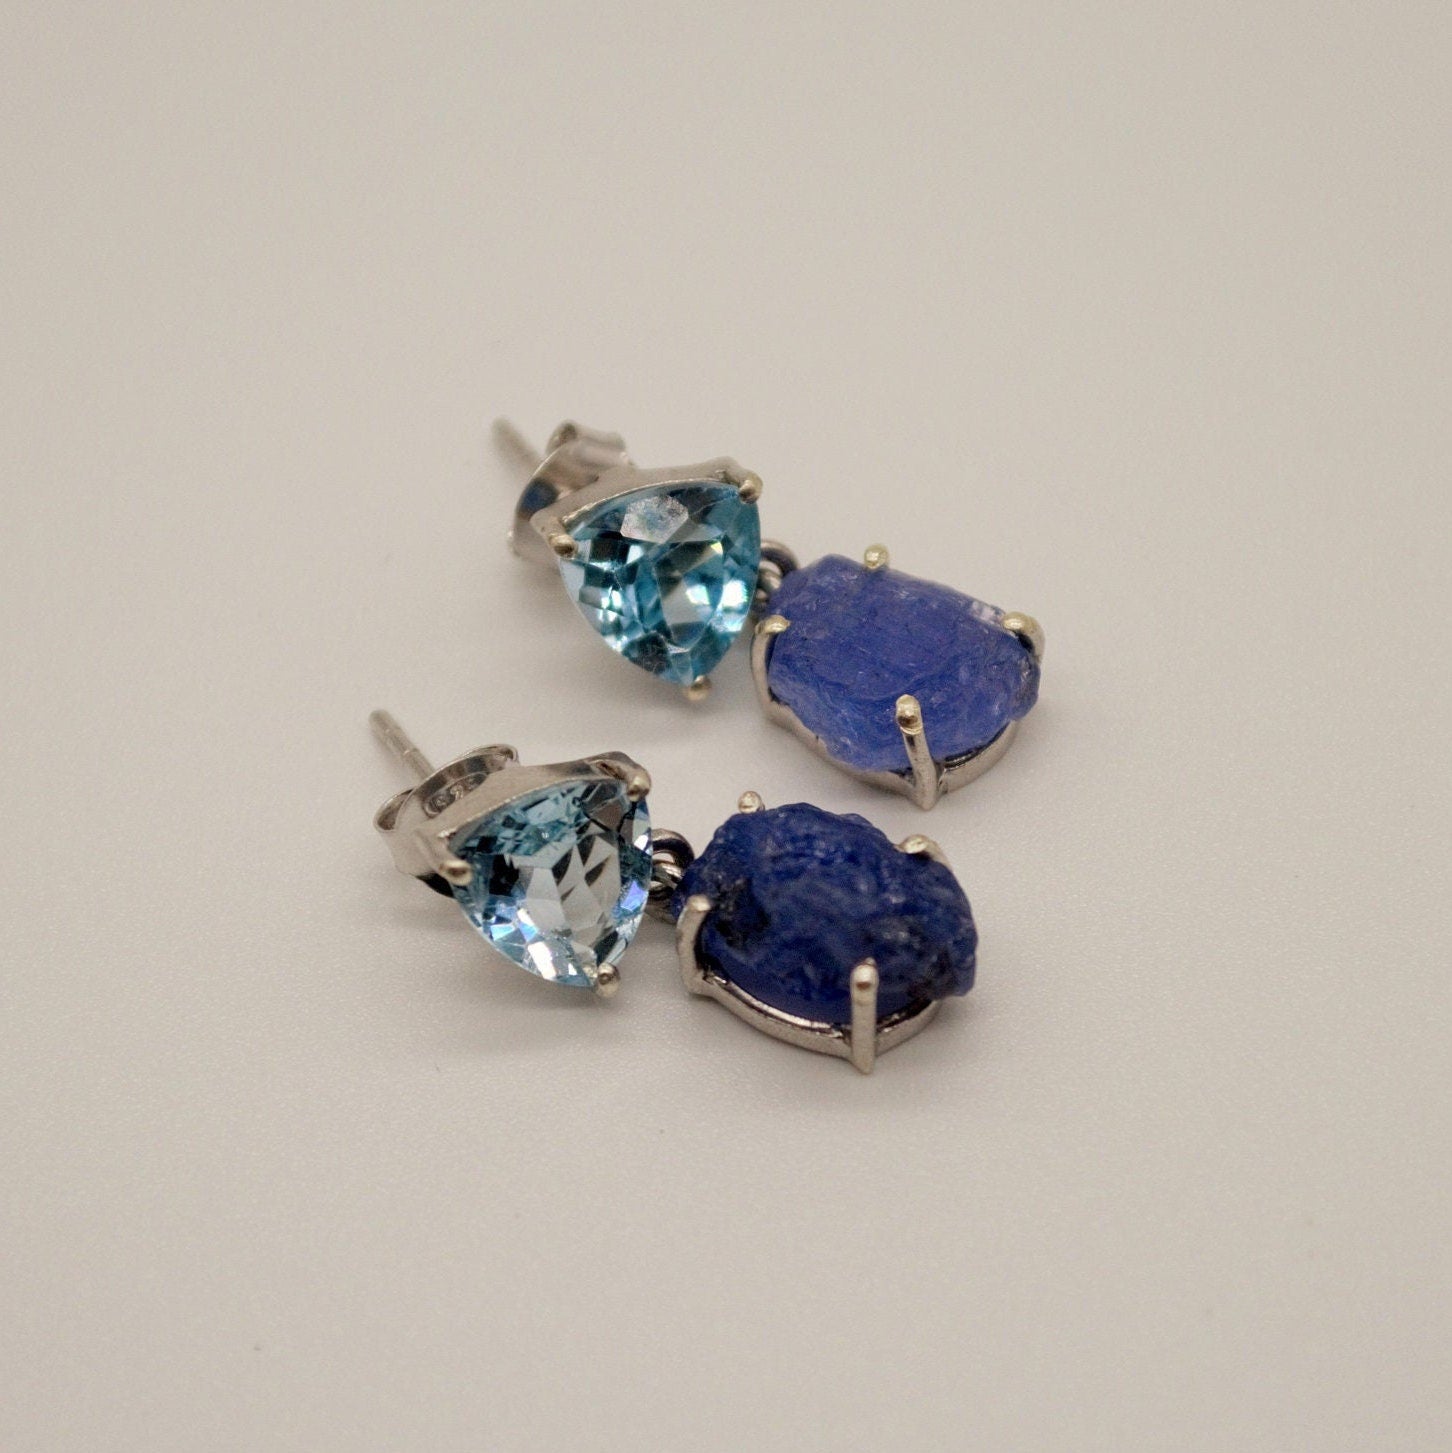 Blue Topaz, Tanzanite Drop Earrings, Sterling Silver Earrings, Christmas Gift, Unique Earrings, December Birthstone, November Birthstone